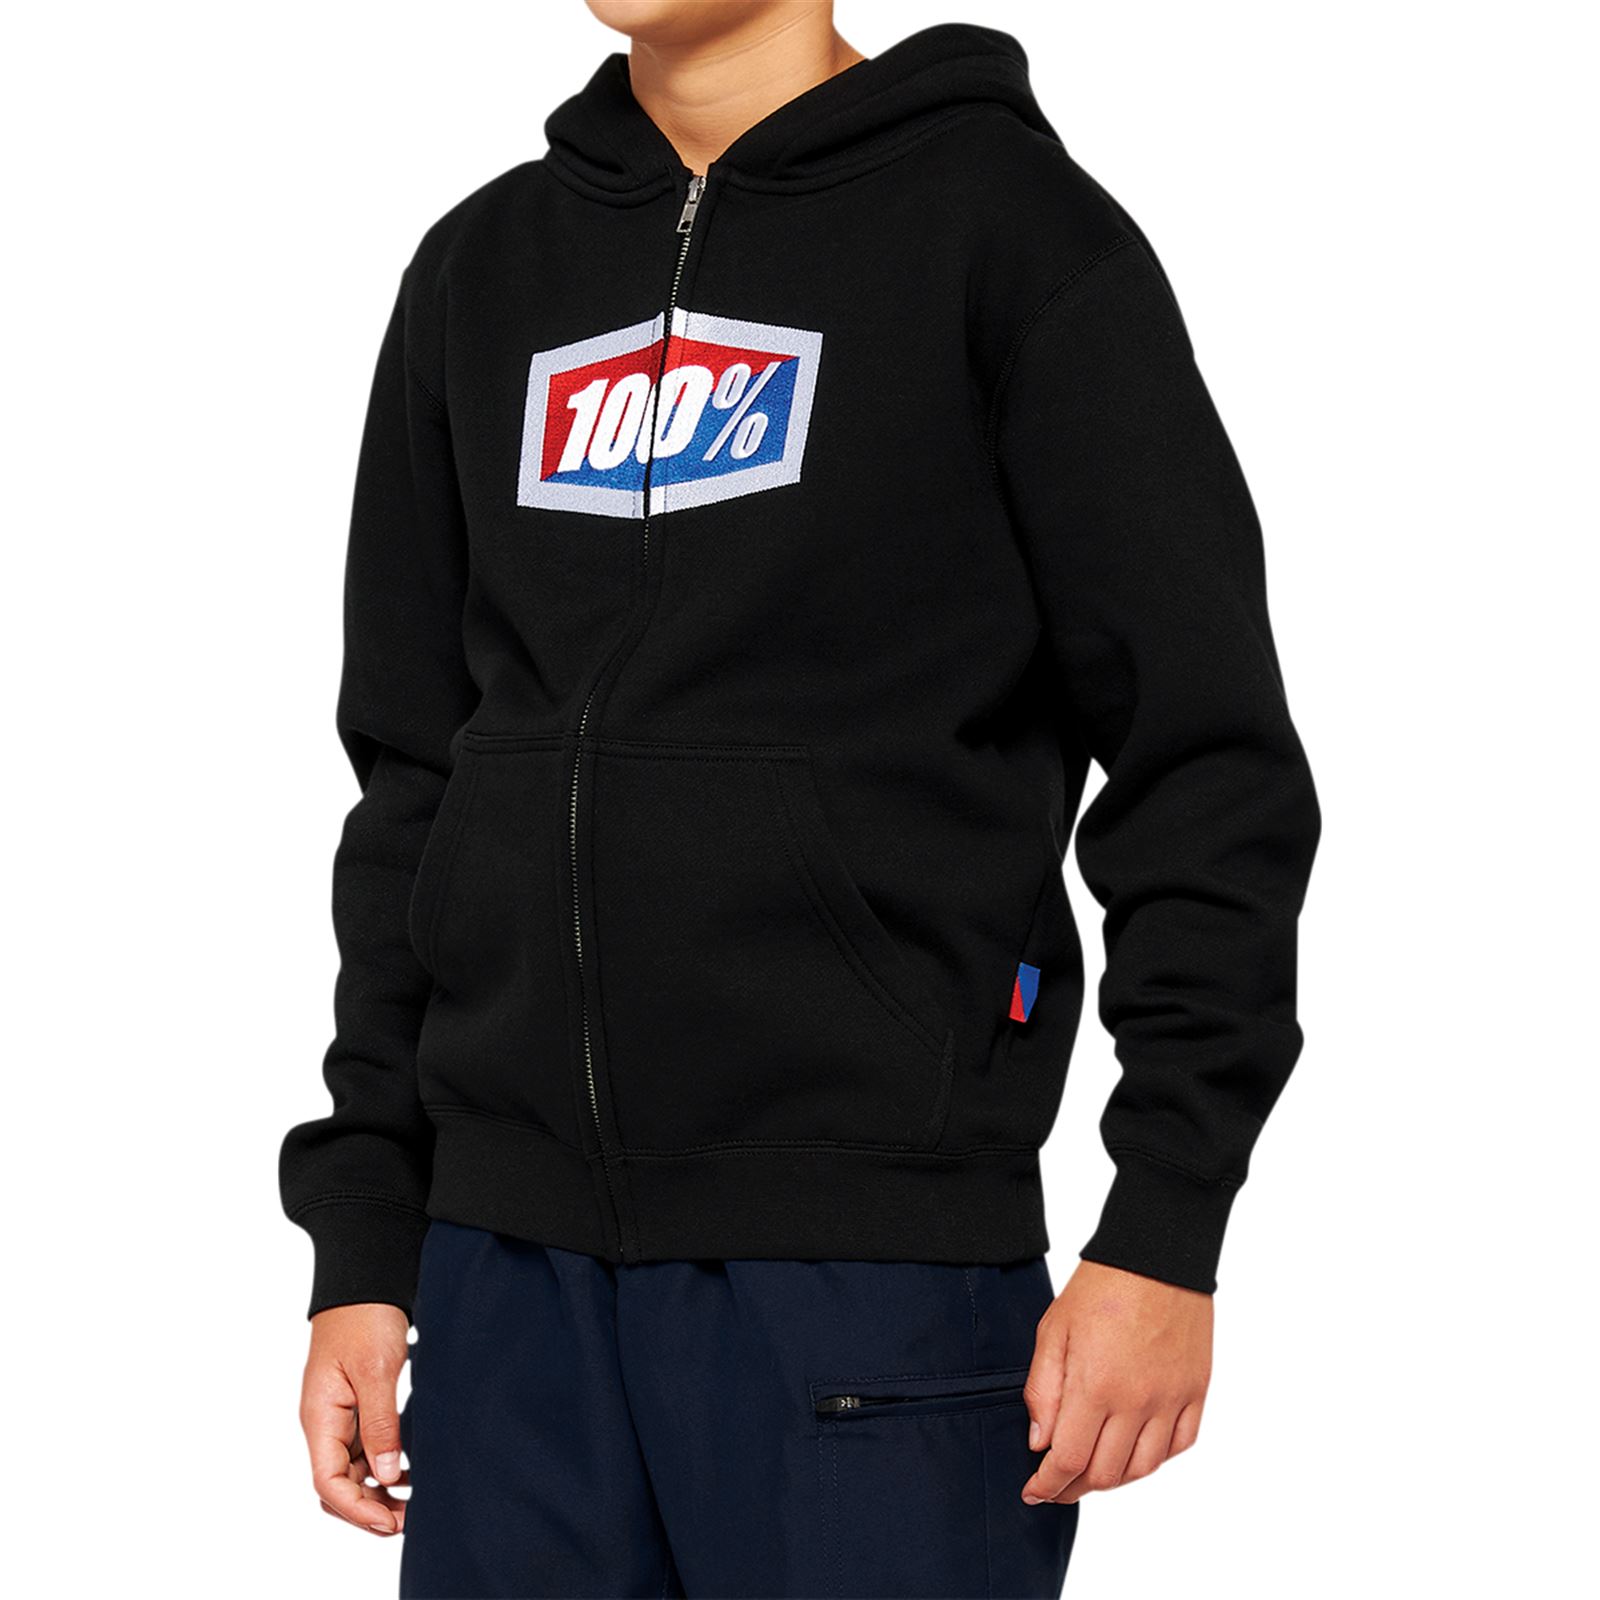 100% Youth Official Zip Hoodie - Black - XL